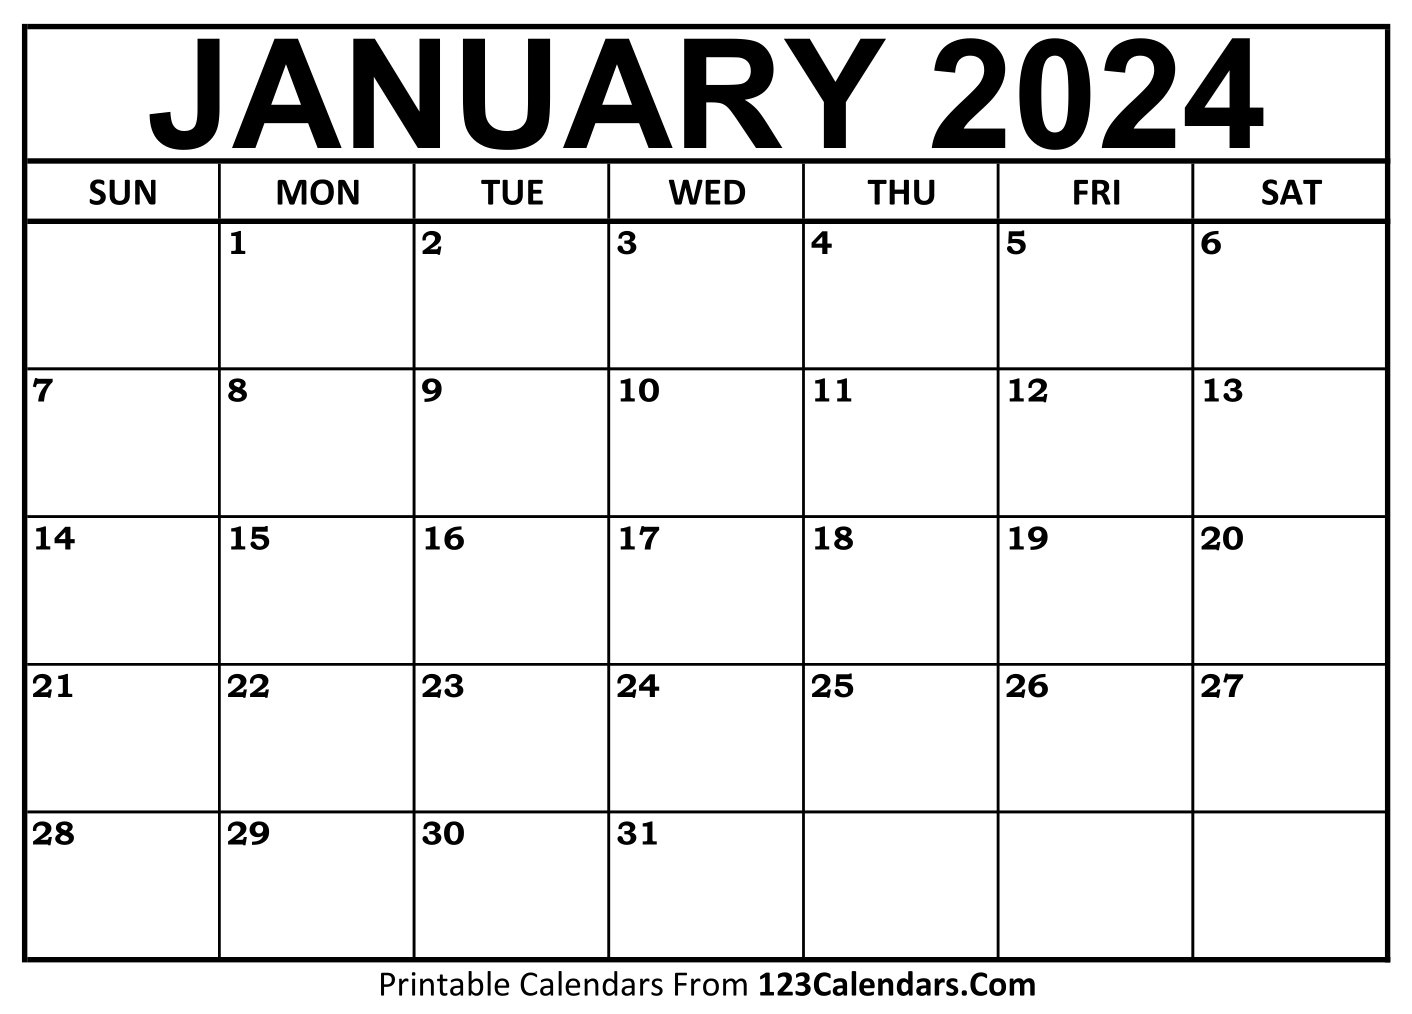 Printable January 2024 Calendar Templates - 123Calendars | Printable 2024 Monthly Calendars